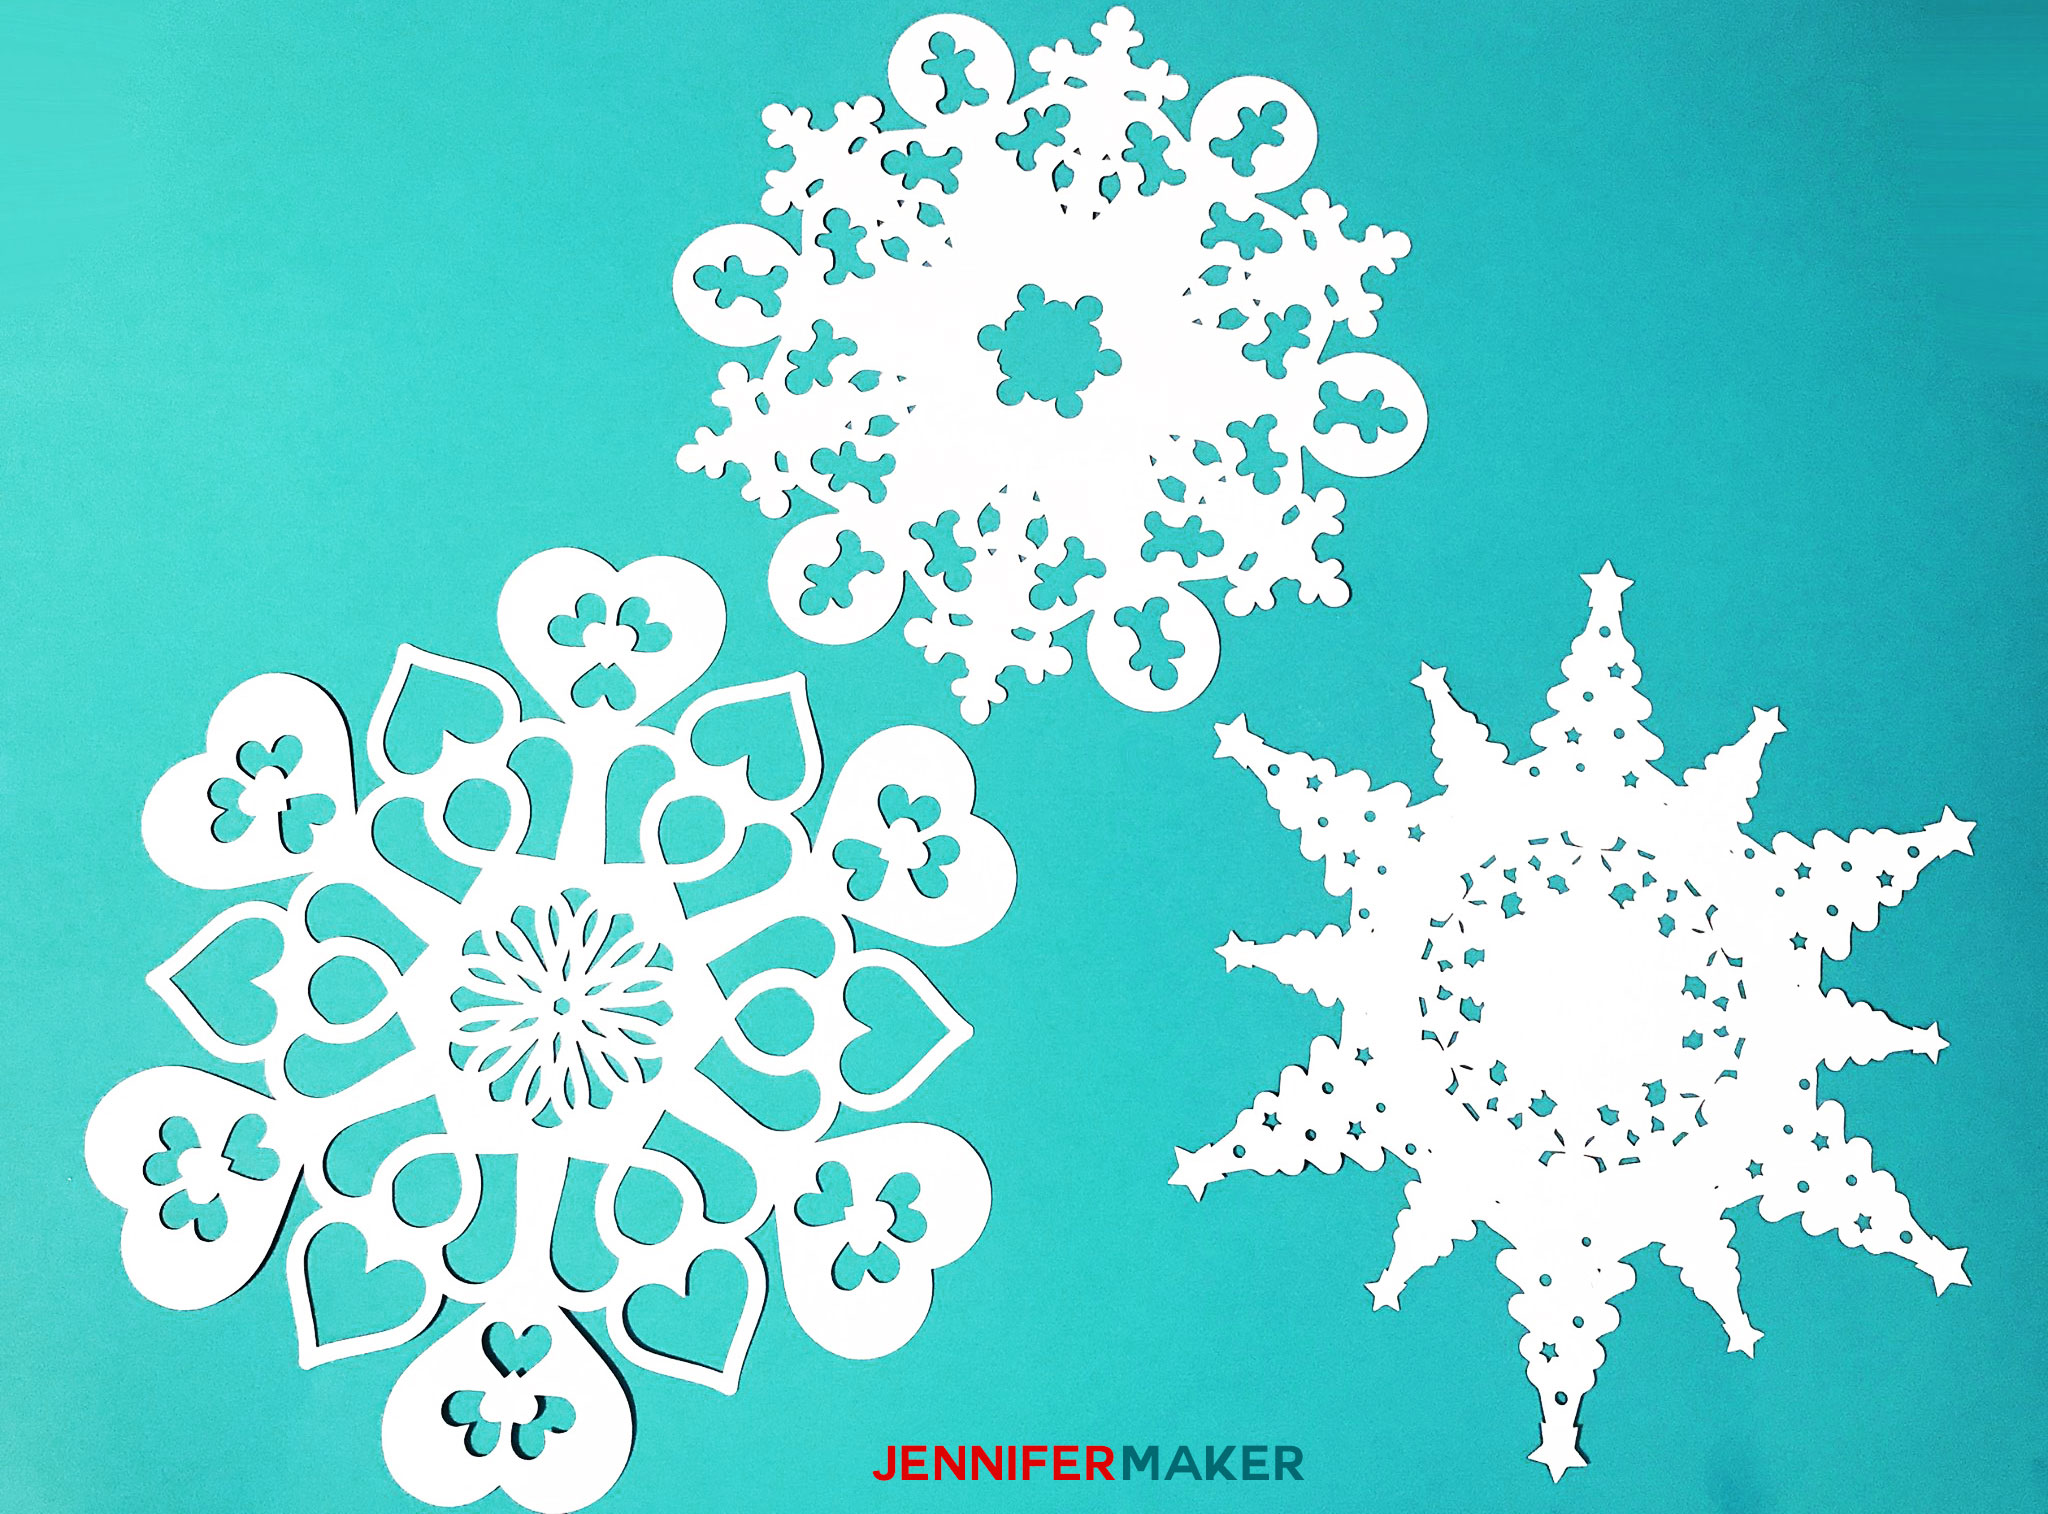 Paper Snowflake Templates How To Make Amazing Winter Decor Jennifer